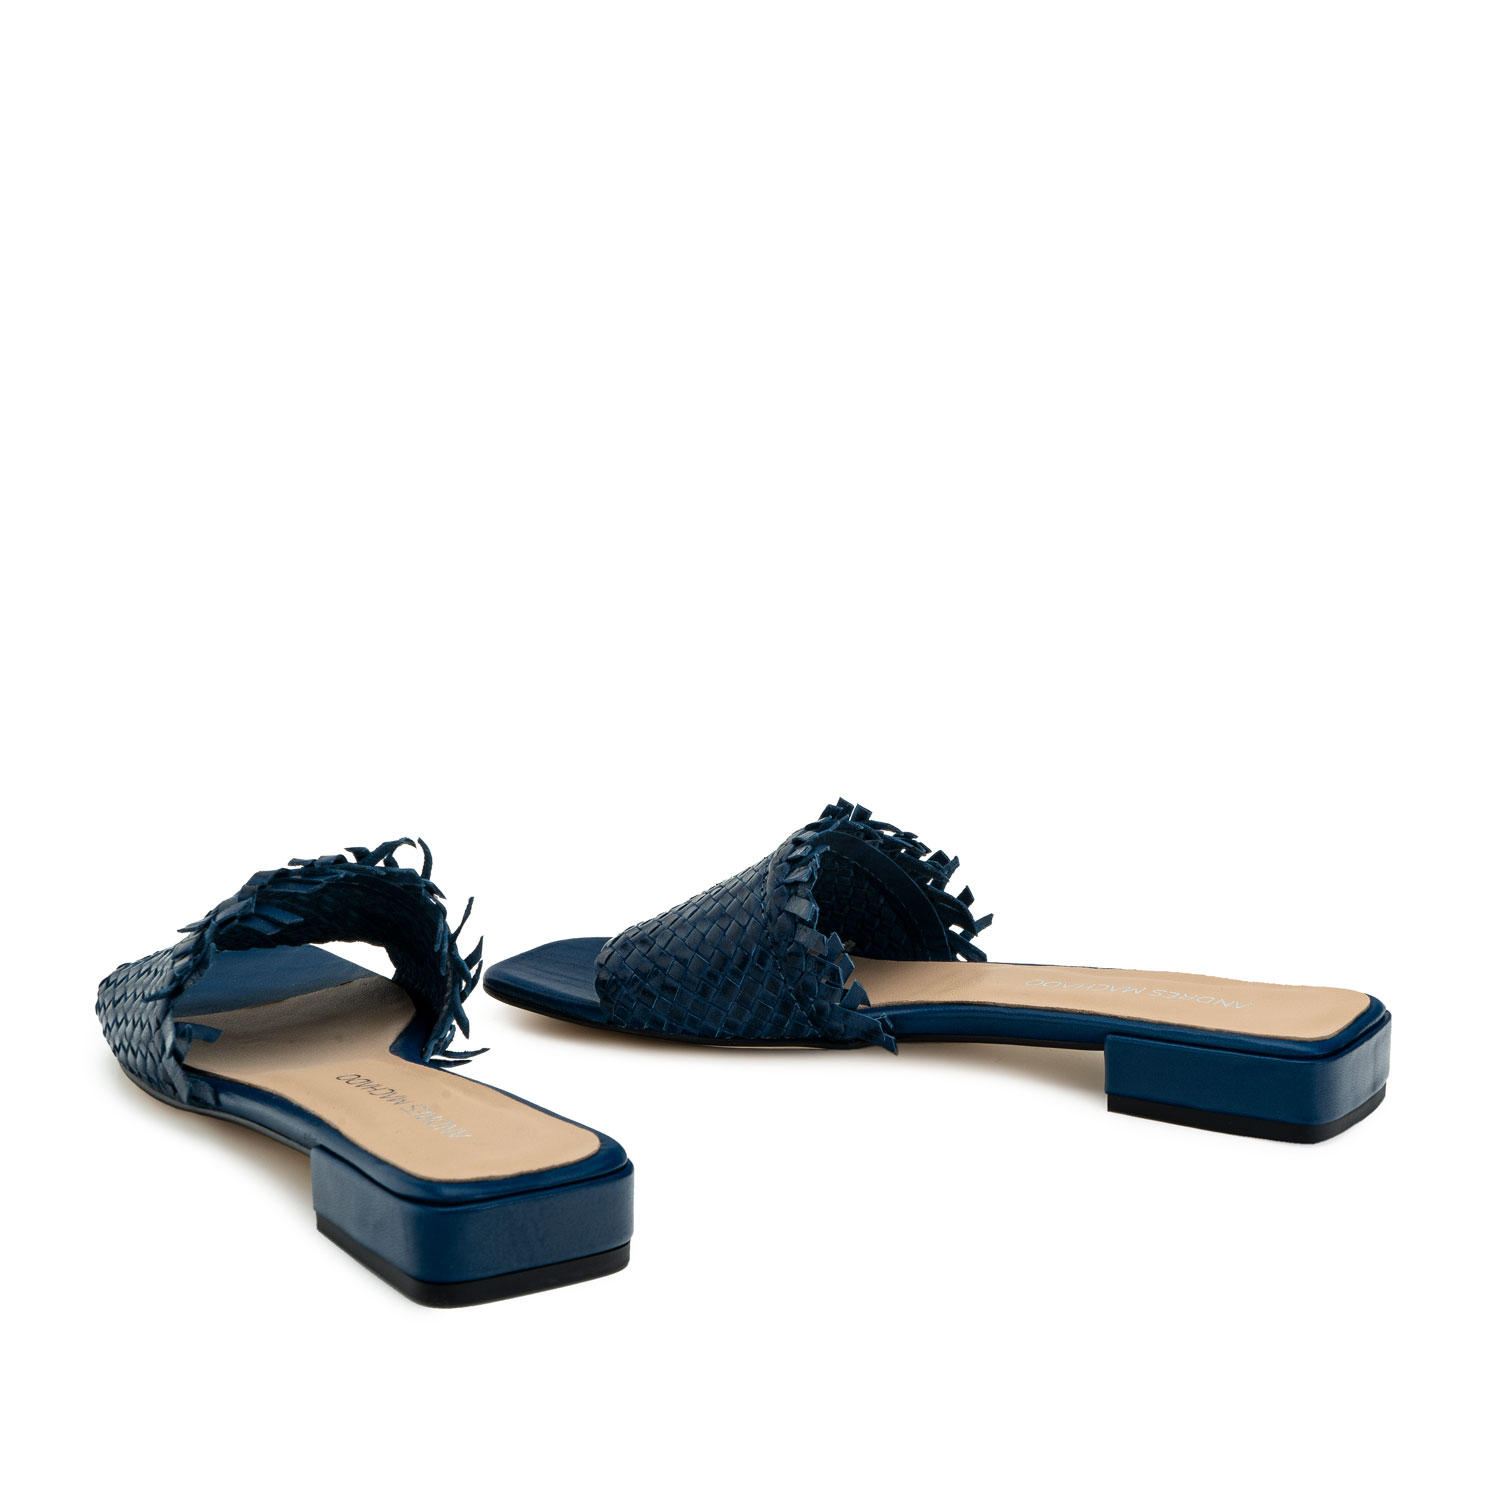 Sandalen aus blauem Leder - MADE IN SPAIN - 